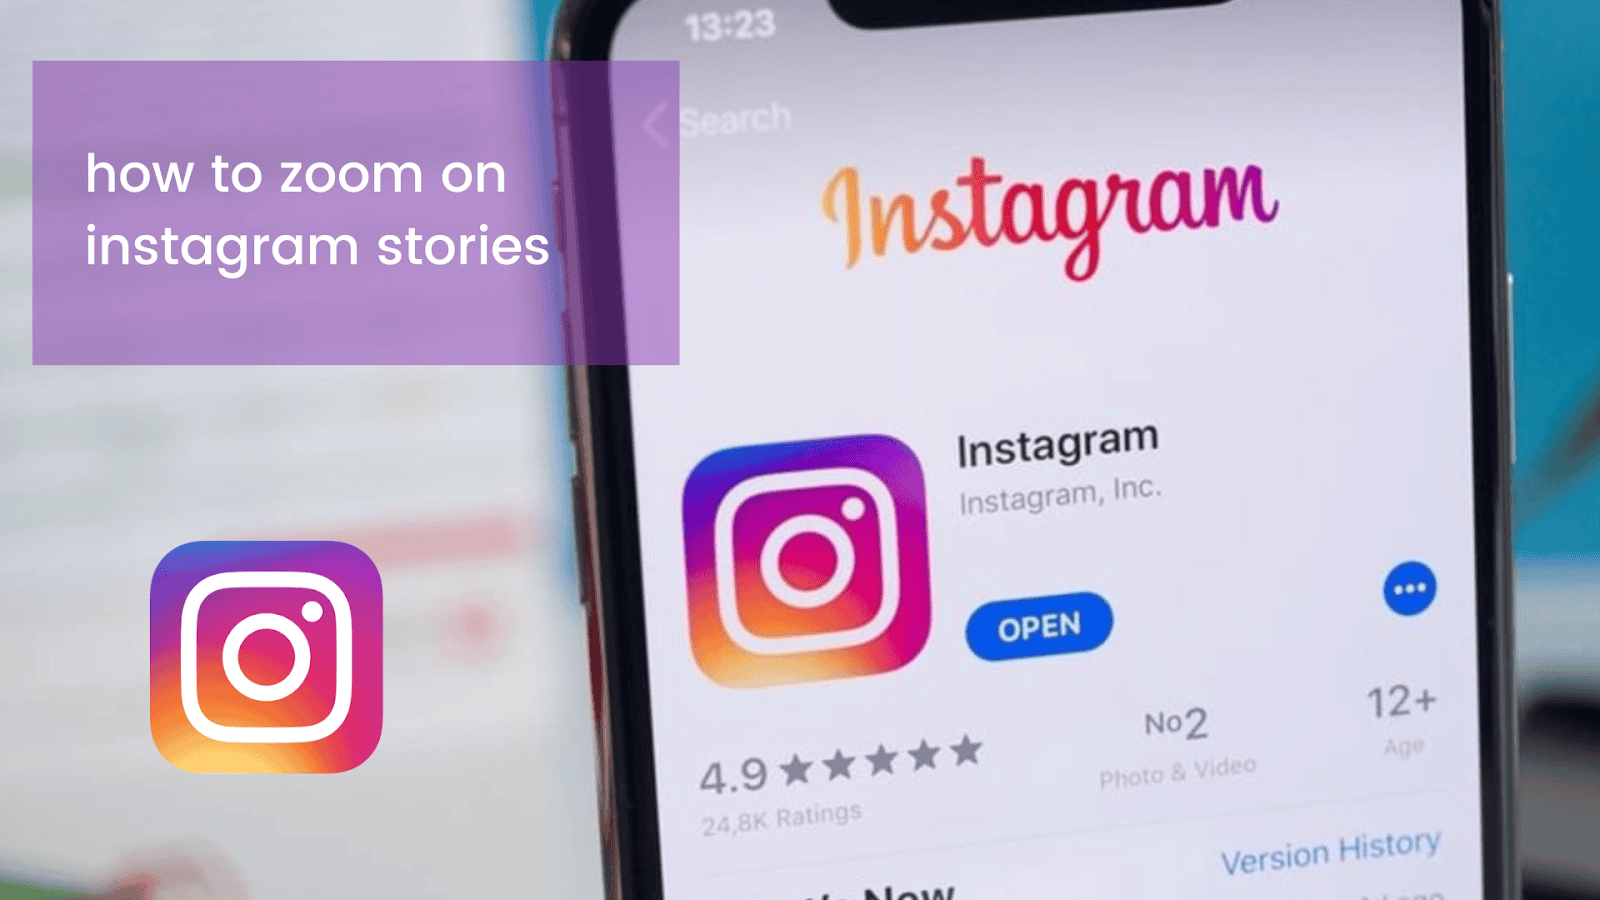 zoom on Instagram stories